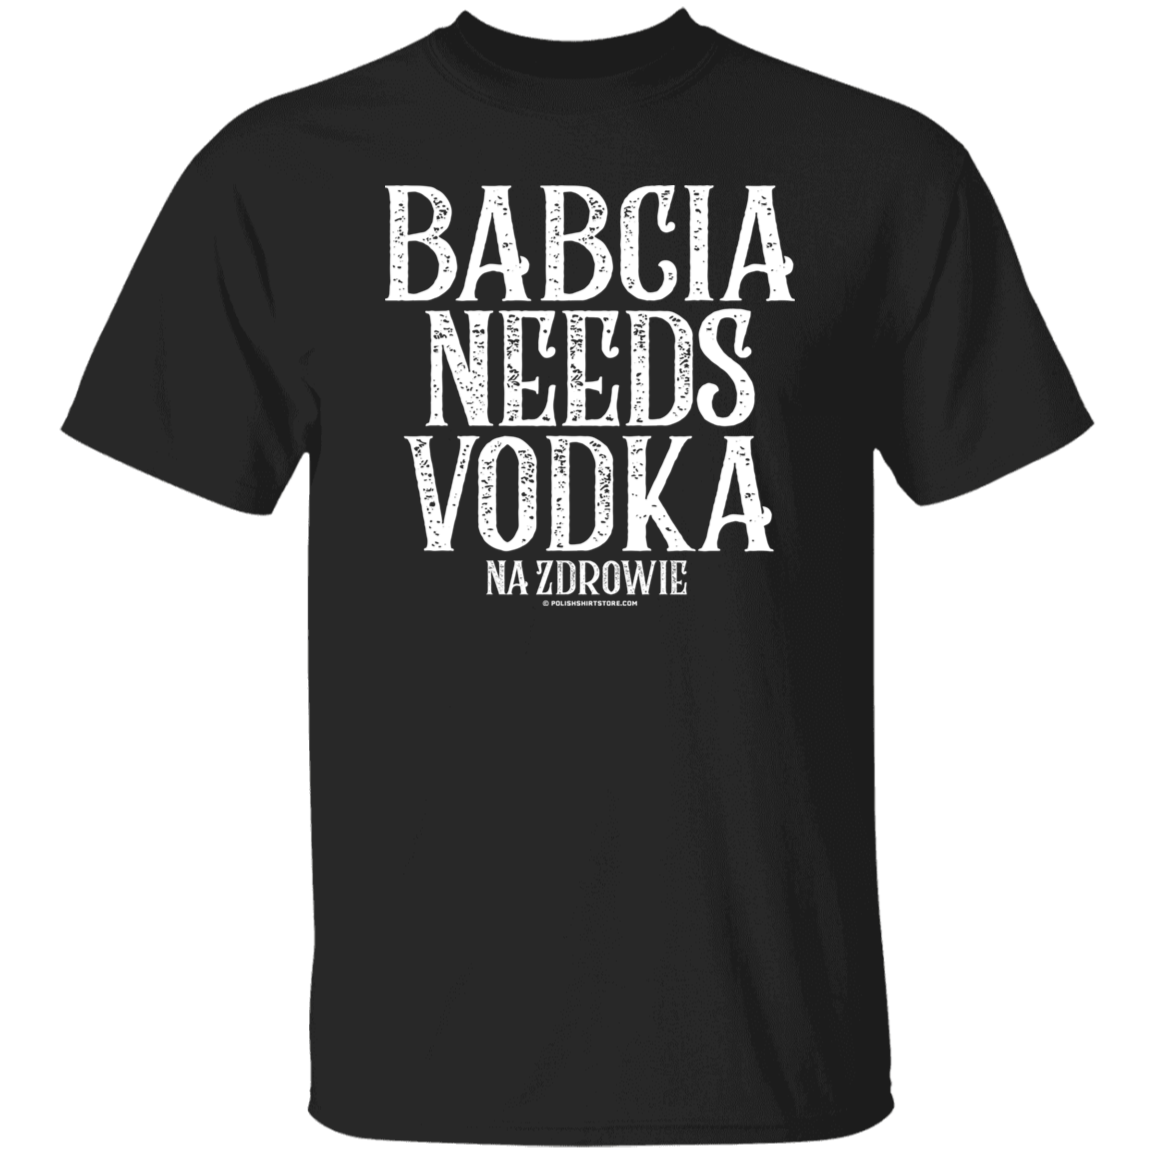 Babcia Needs Vodka Apparel CustomCat G500 5.3 oz. T-Shirt Black S